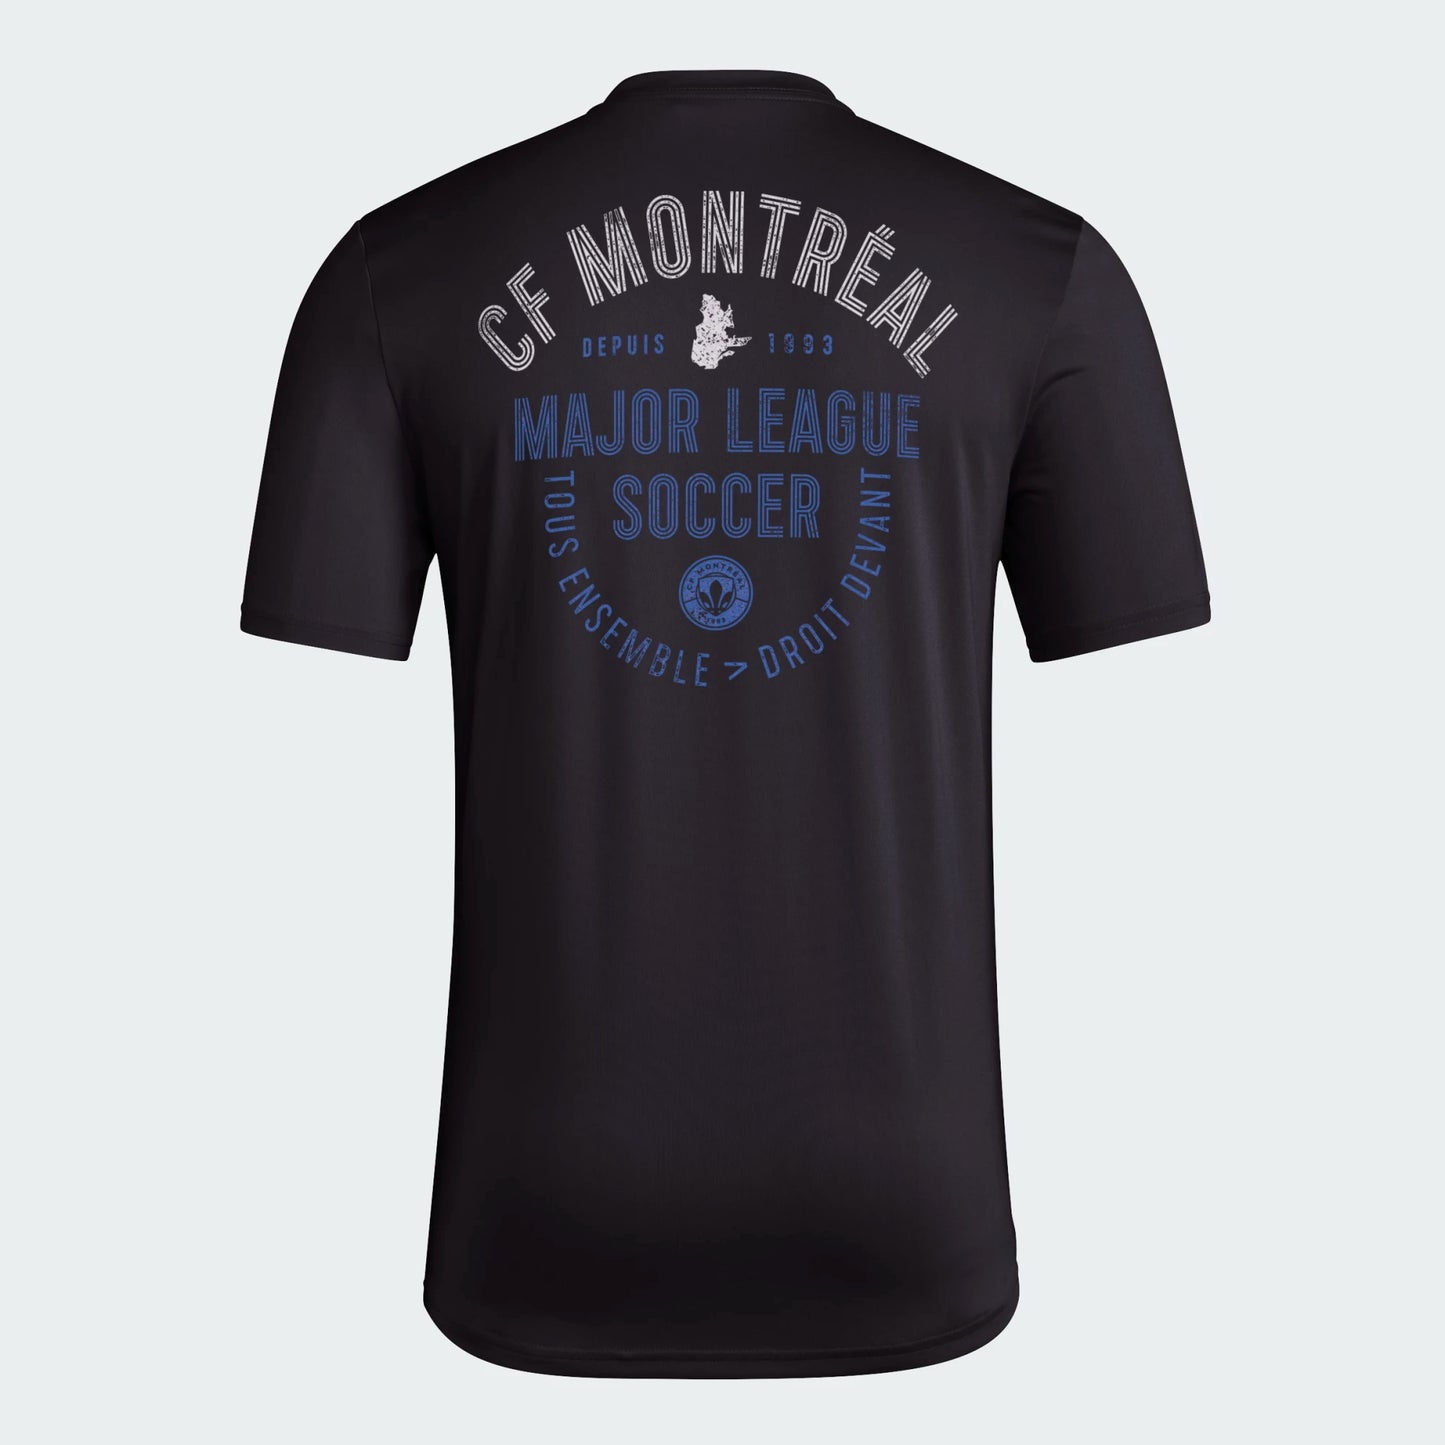 Adidas-h-t-shirt before match CF Montreal MLS